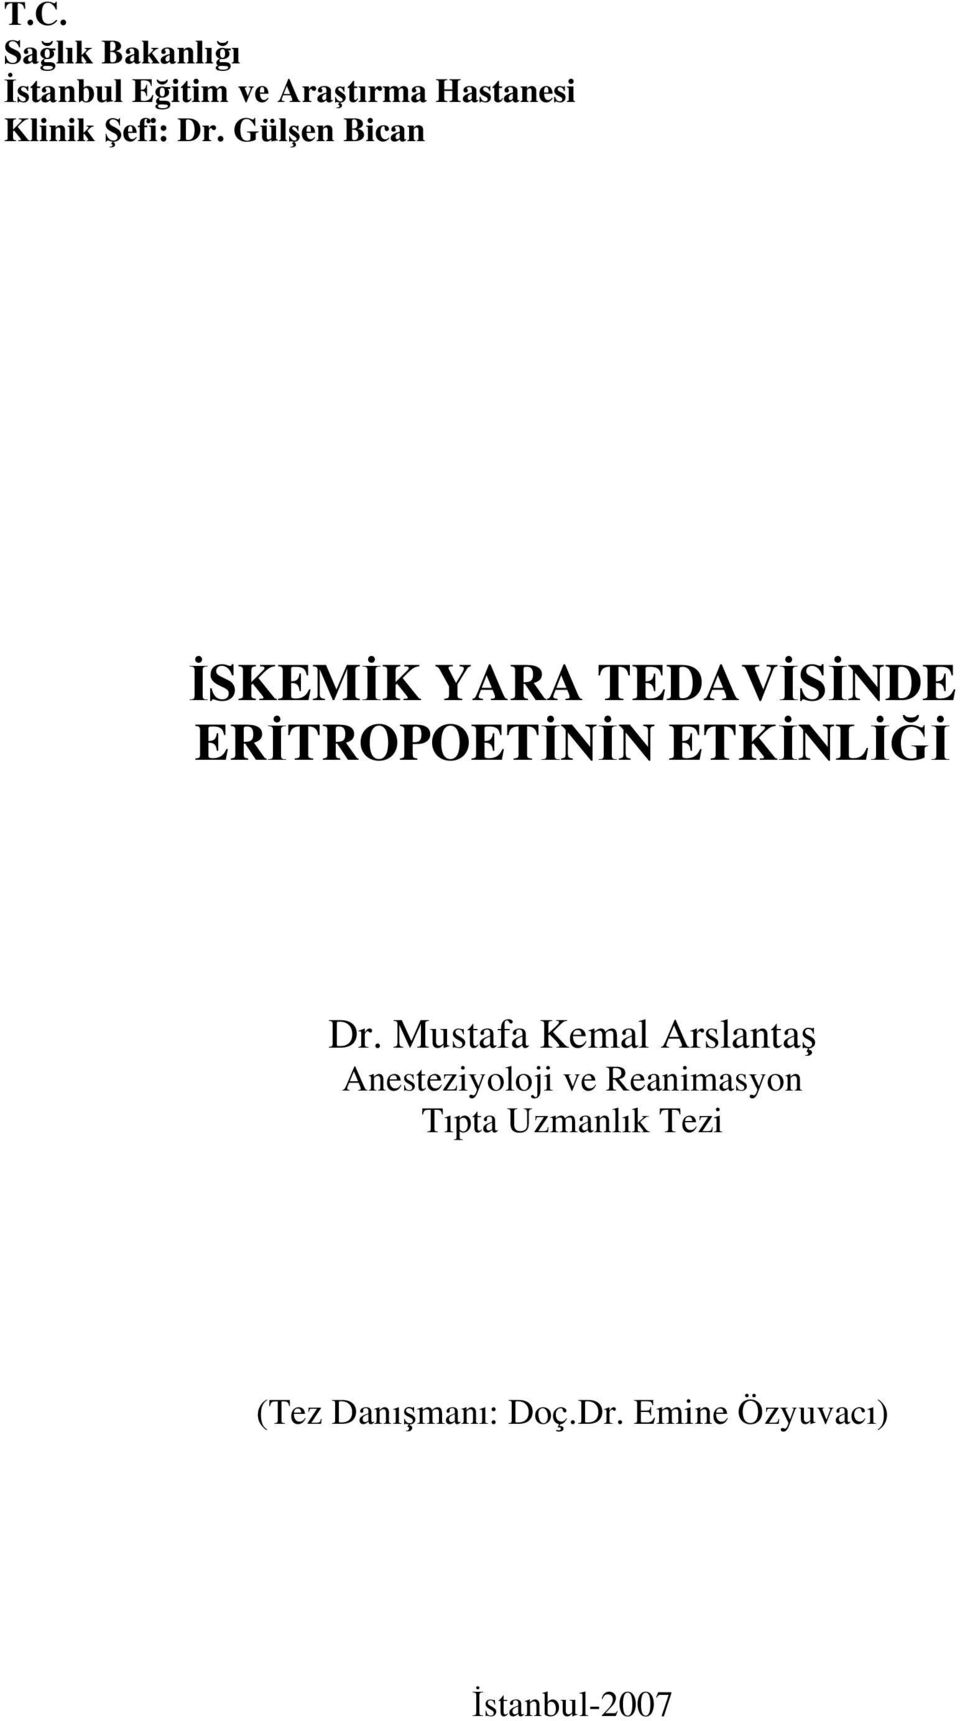 Mustafa Kemal Arslanta Anesteziyoloji ve Reanimasyon Tıpta